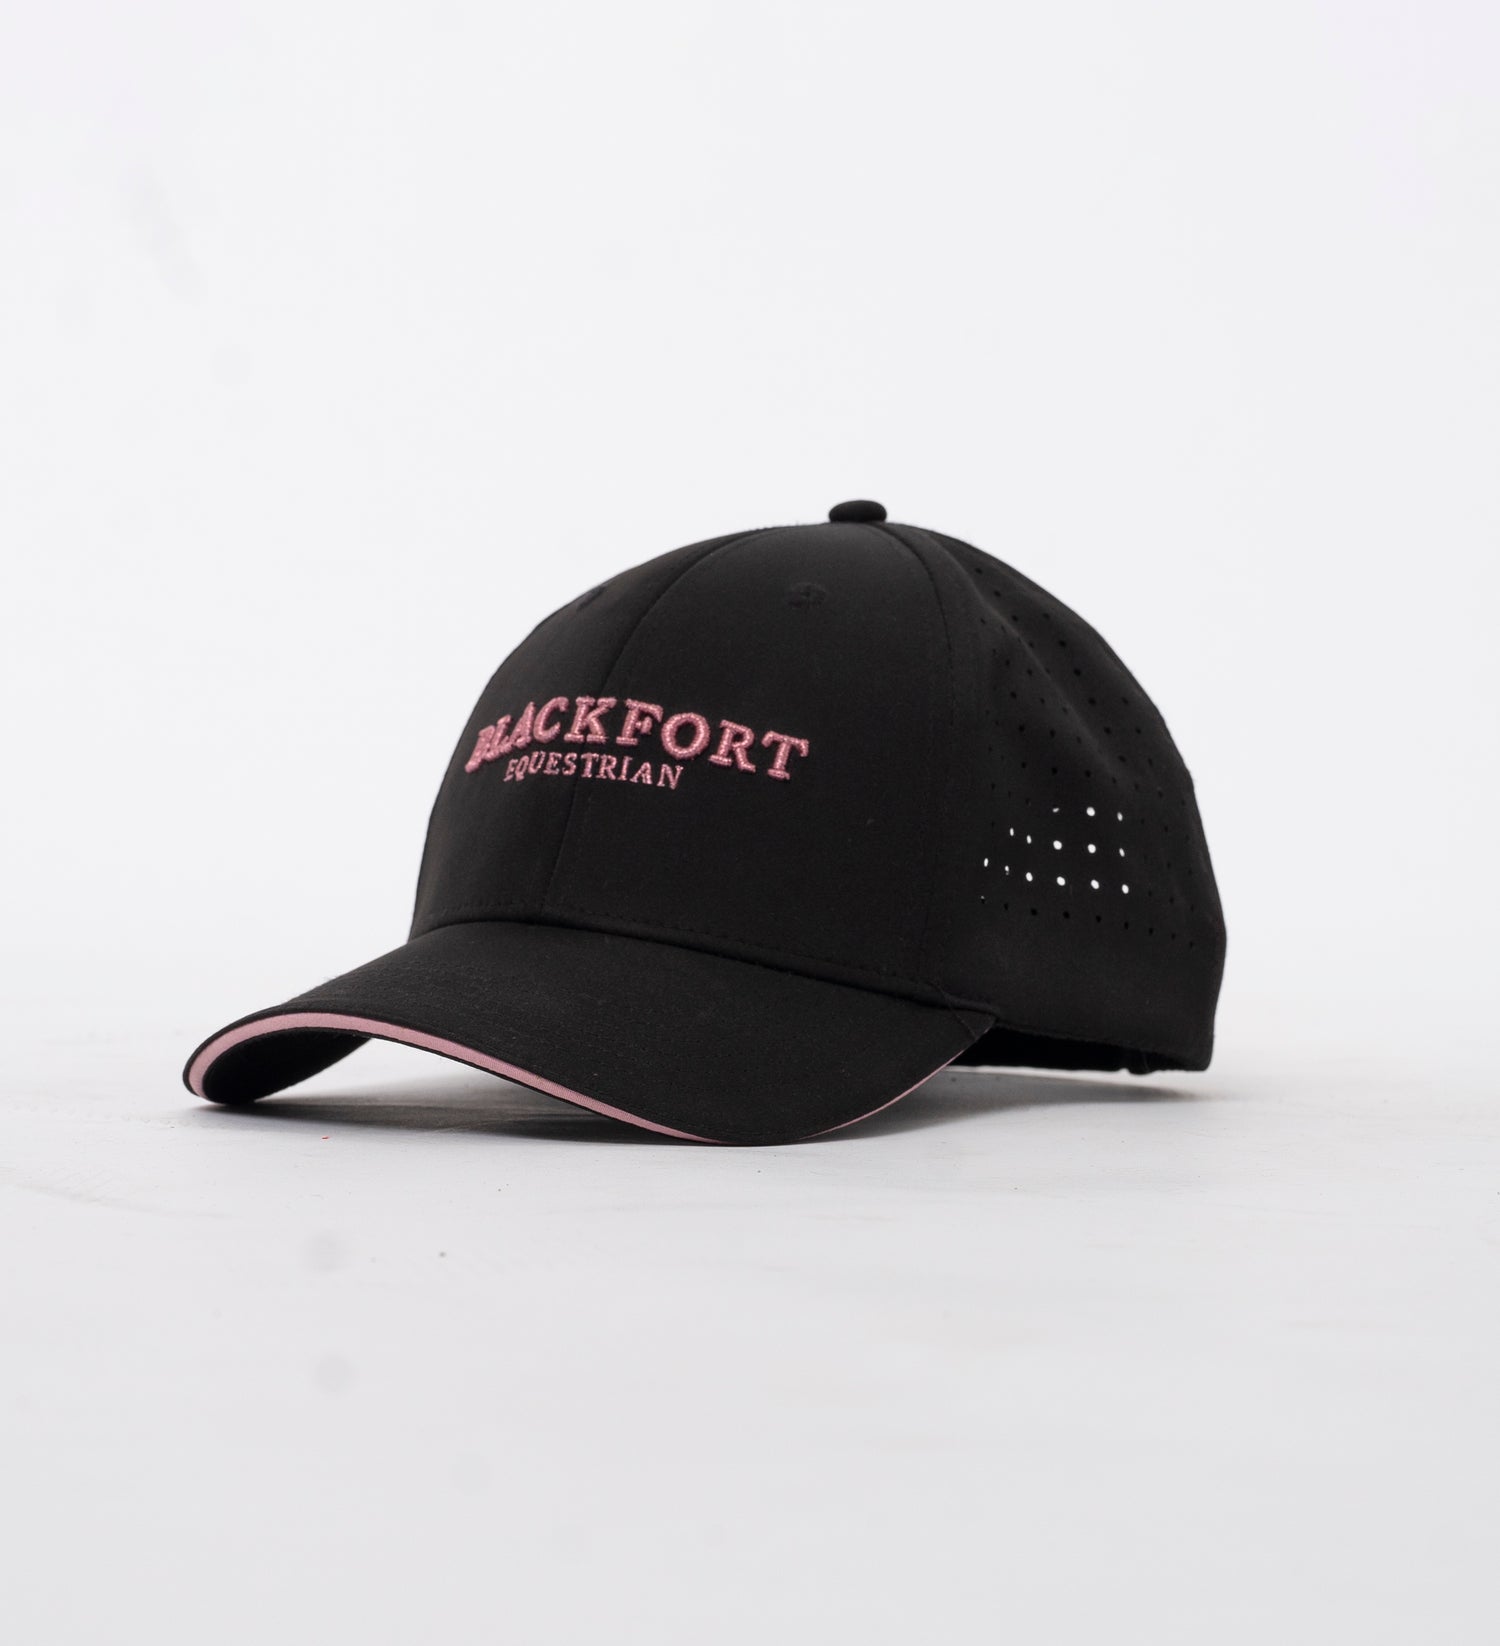 Blackfort Equestrian Baseball Cap Black &amp; Pink mesh